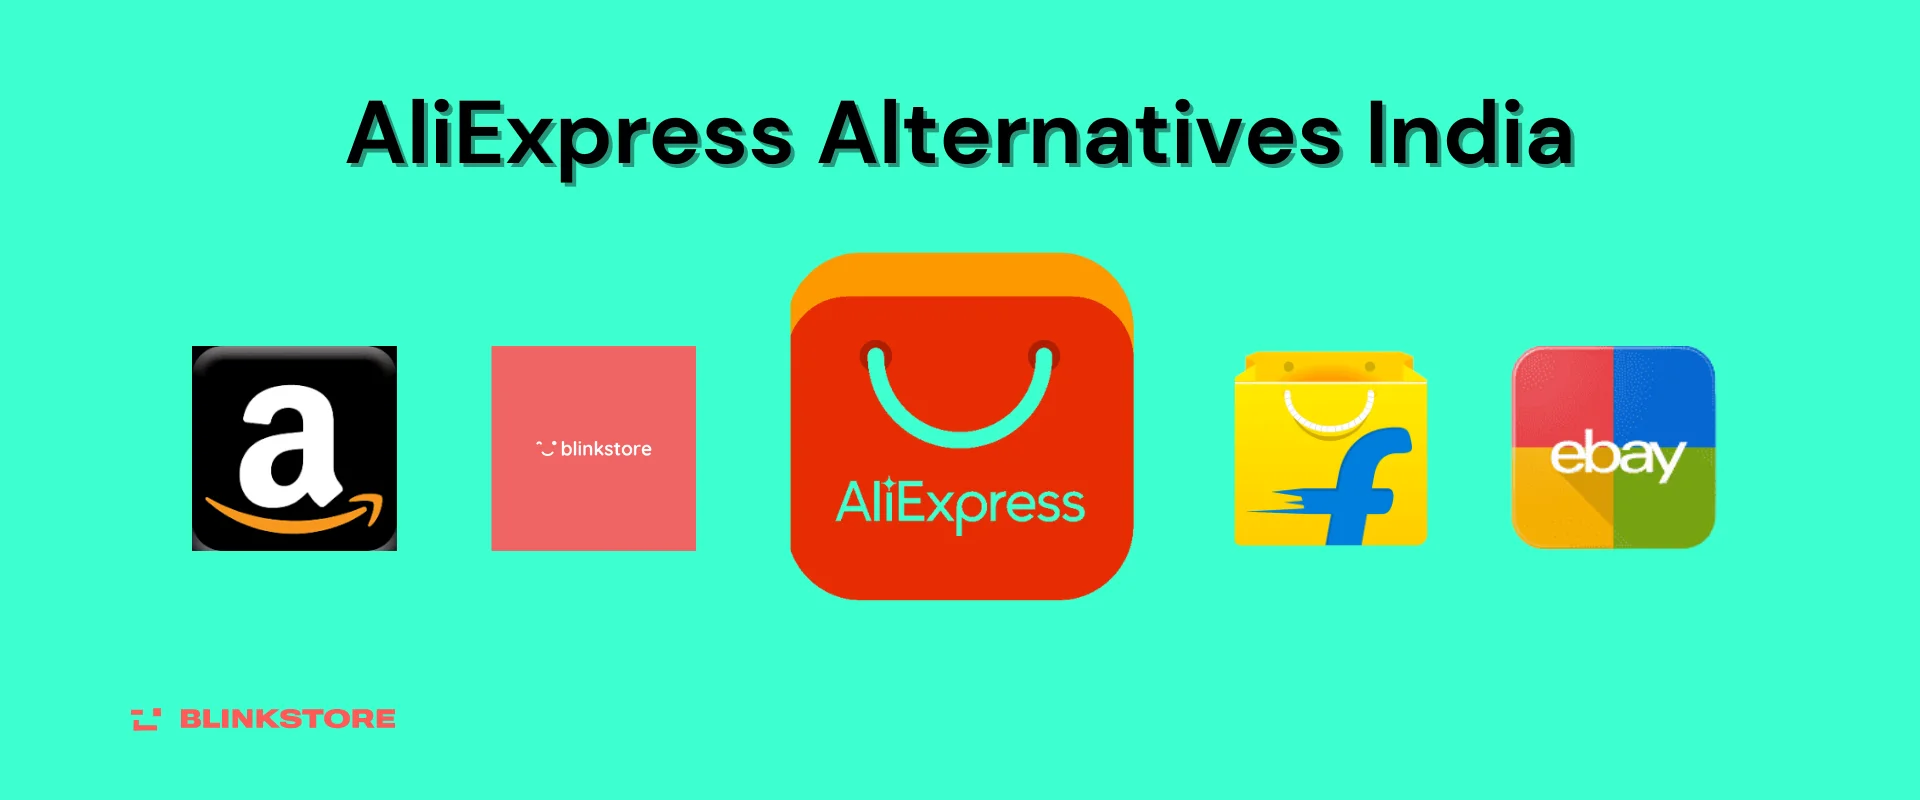 AliExpress India: 11 Best Dropshipping AliExpress Alternatives India